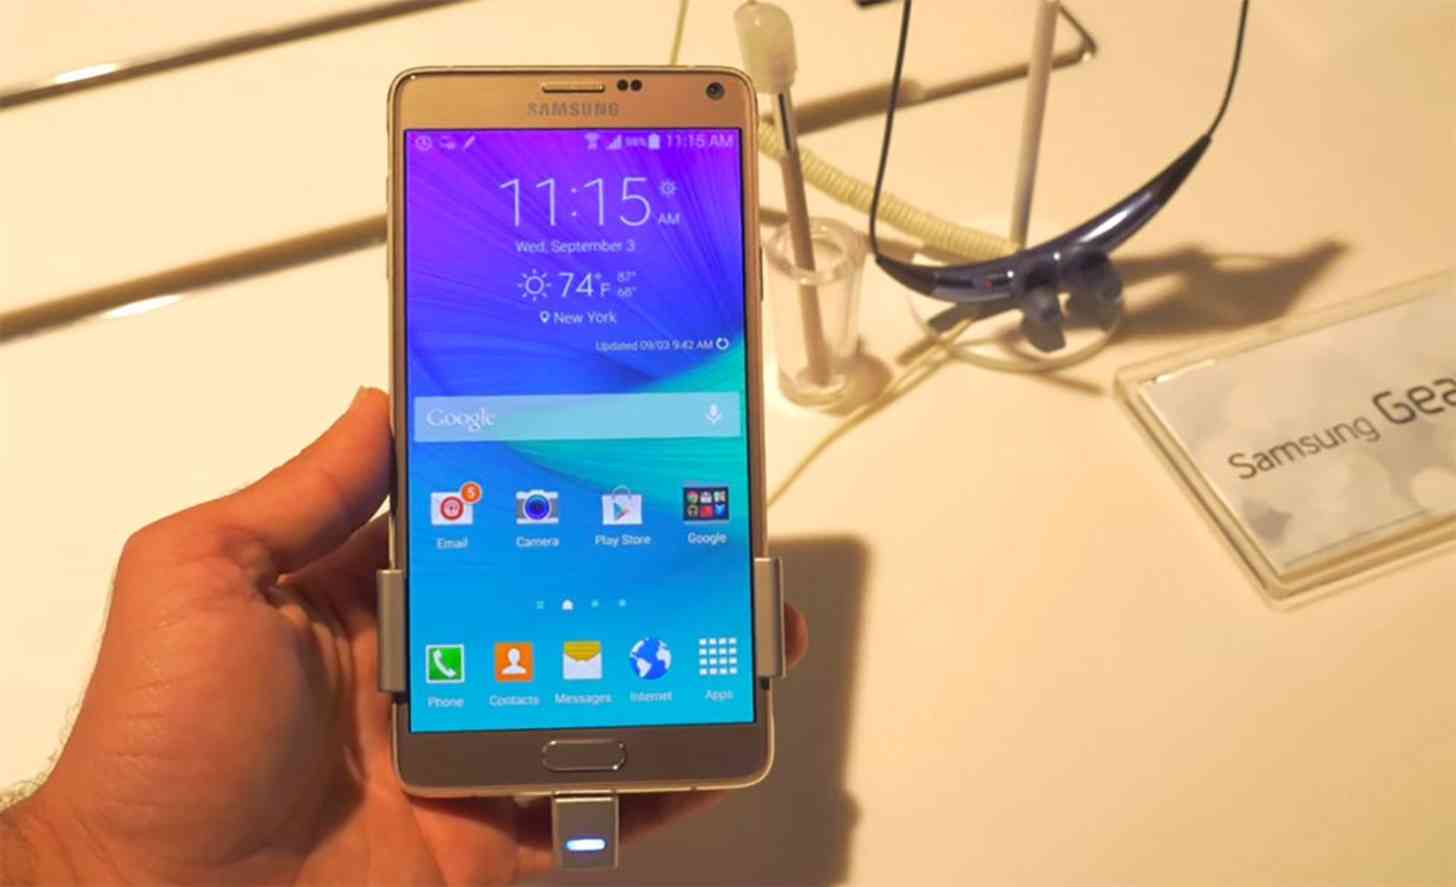 Samsung Galaxy Note 4 hands on